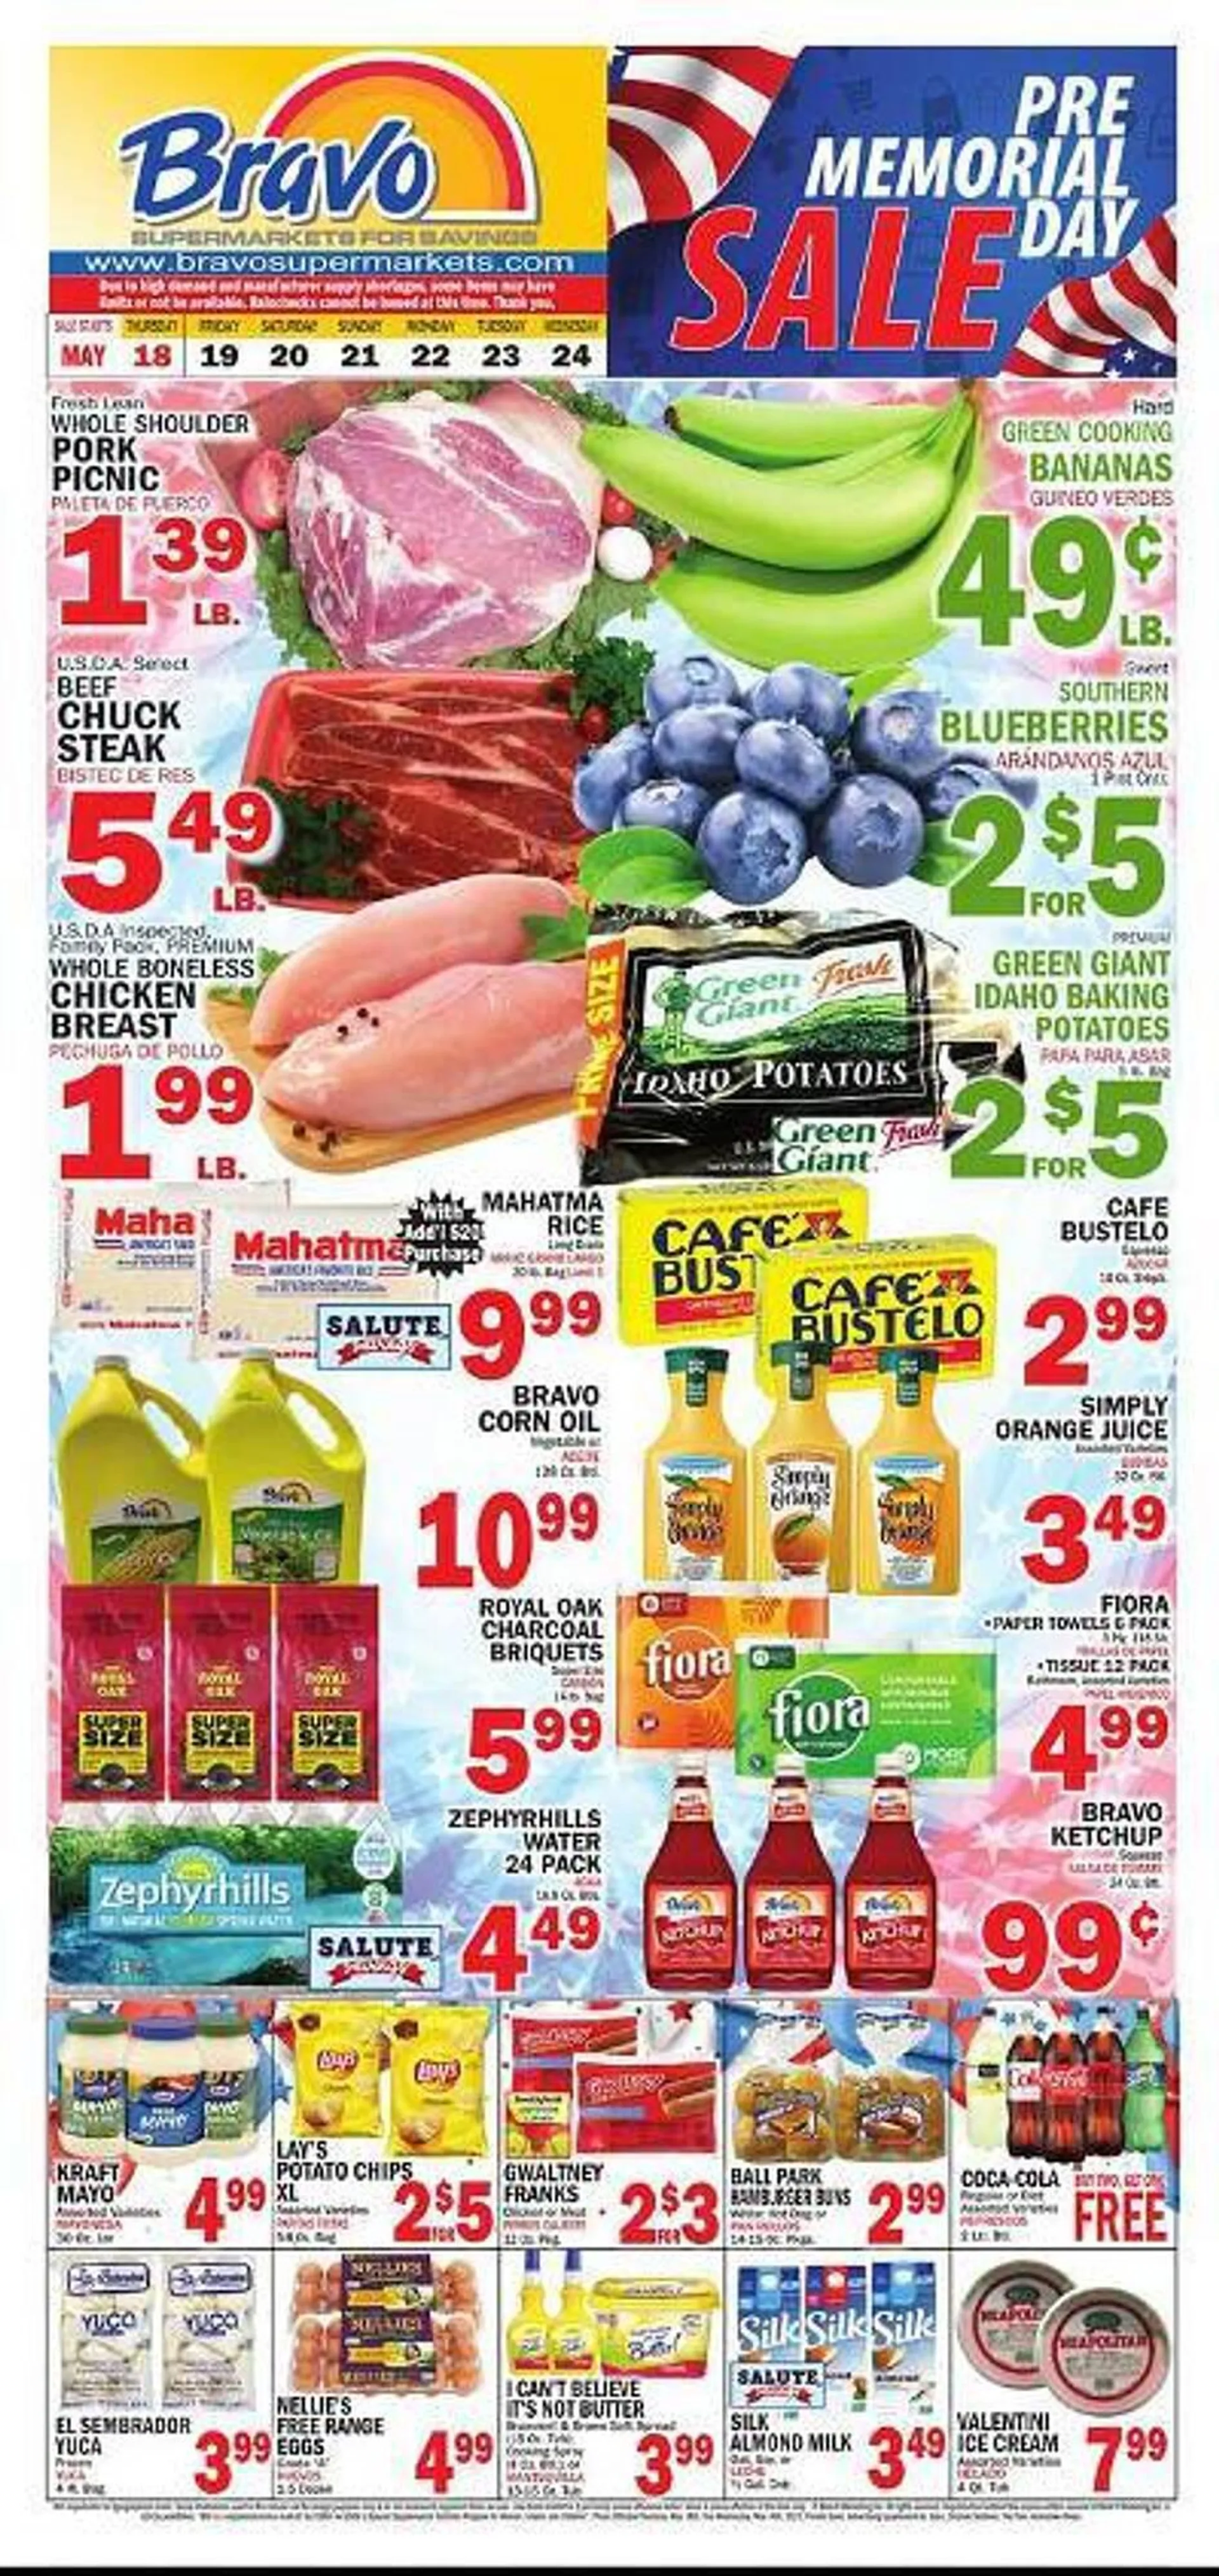 Bravo Supermarkets ad - 1